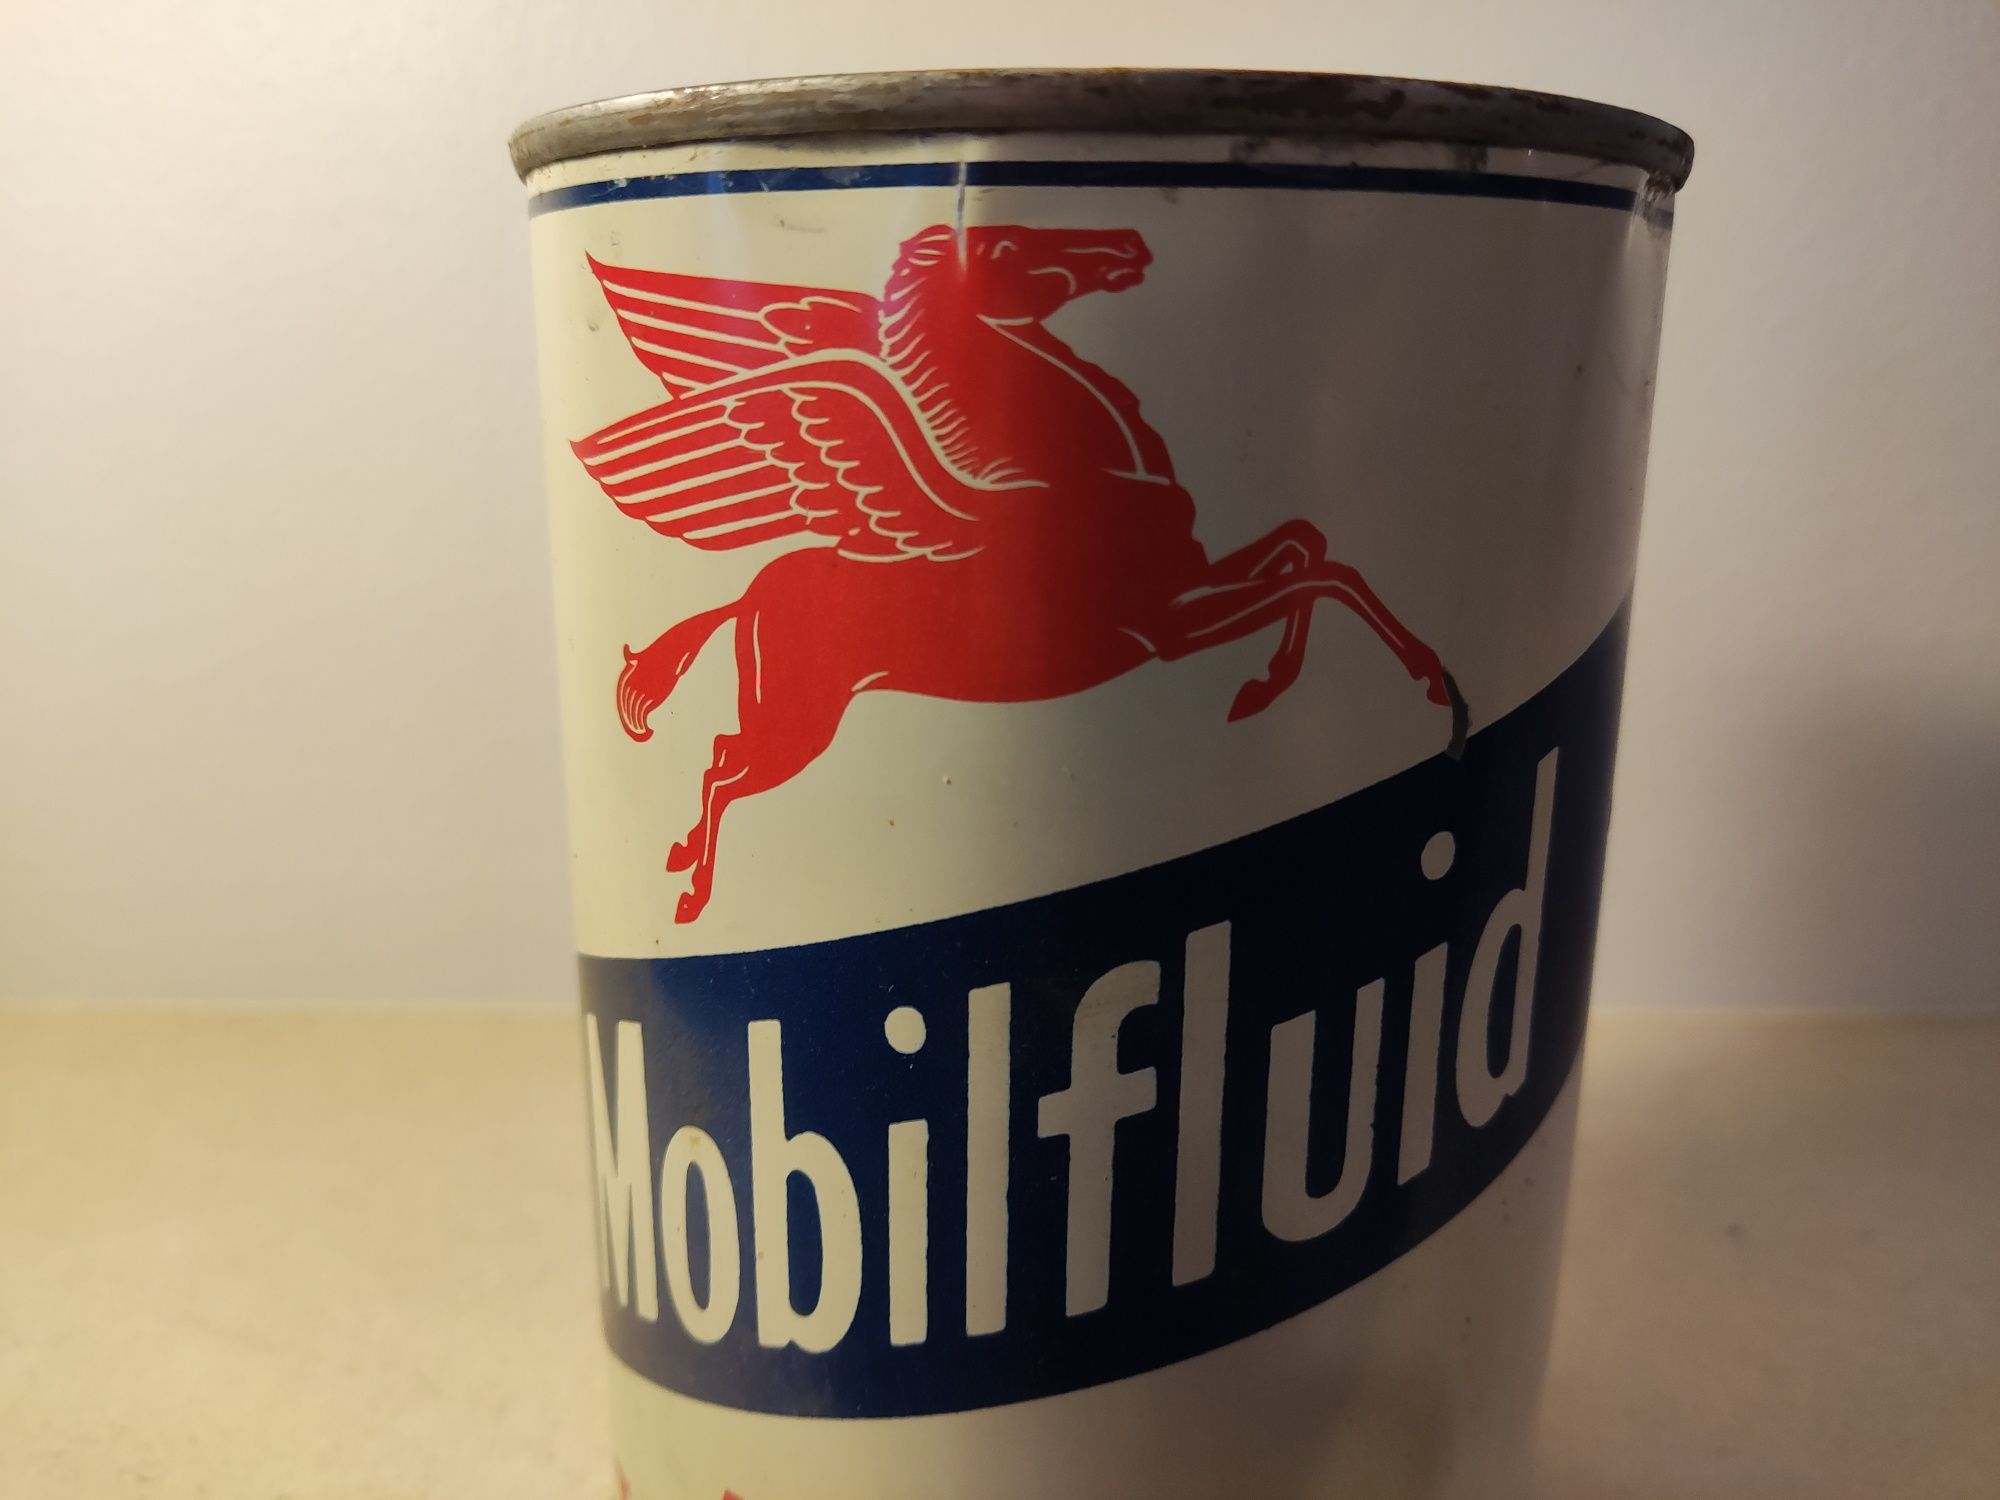 Lata vintage Mobifluid Automatic Transmission Fluid (cheia) coleção